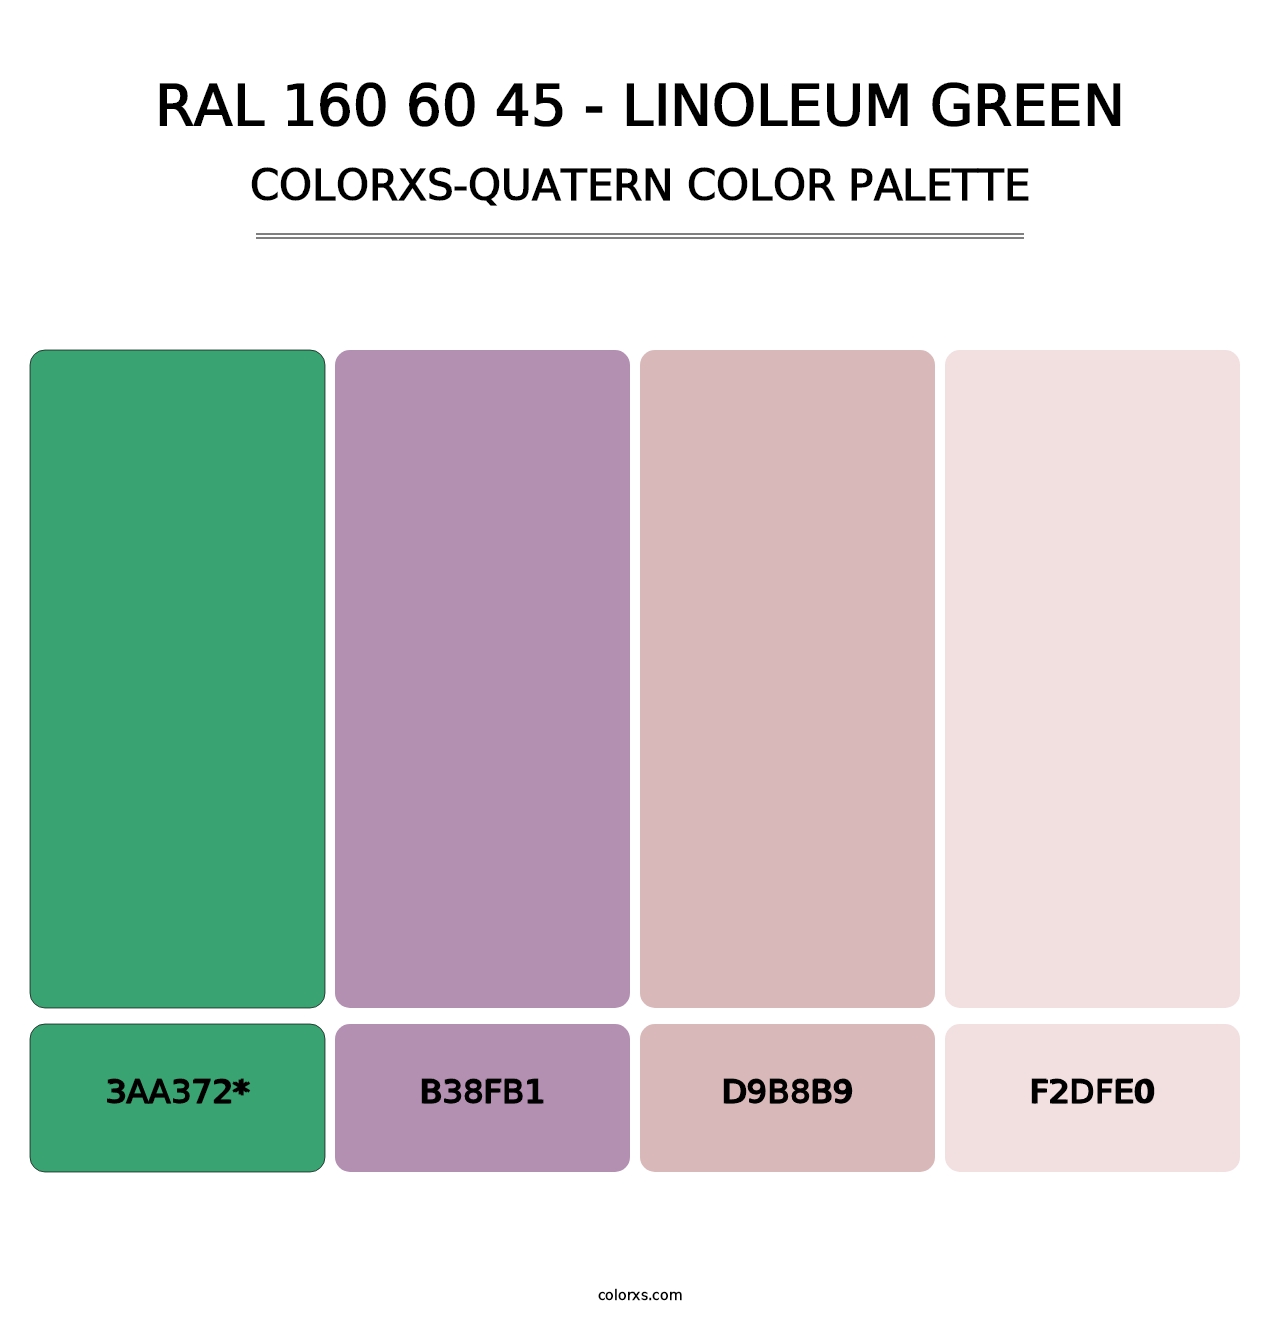 RAL 160 60 45 - Linoleum Green - Colorxs Quatern Palette